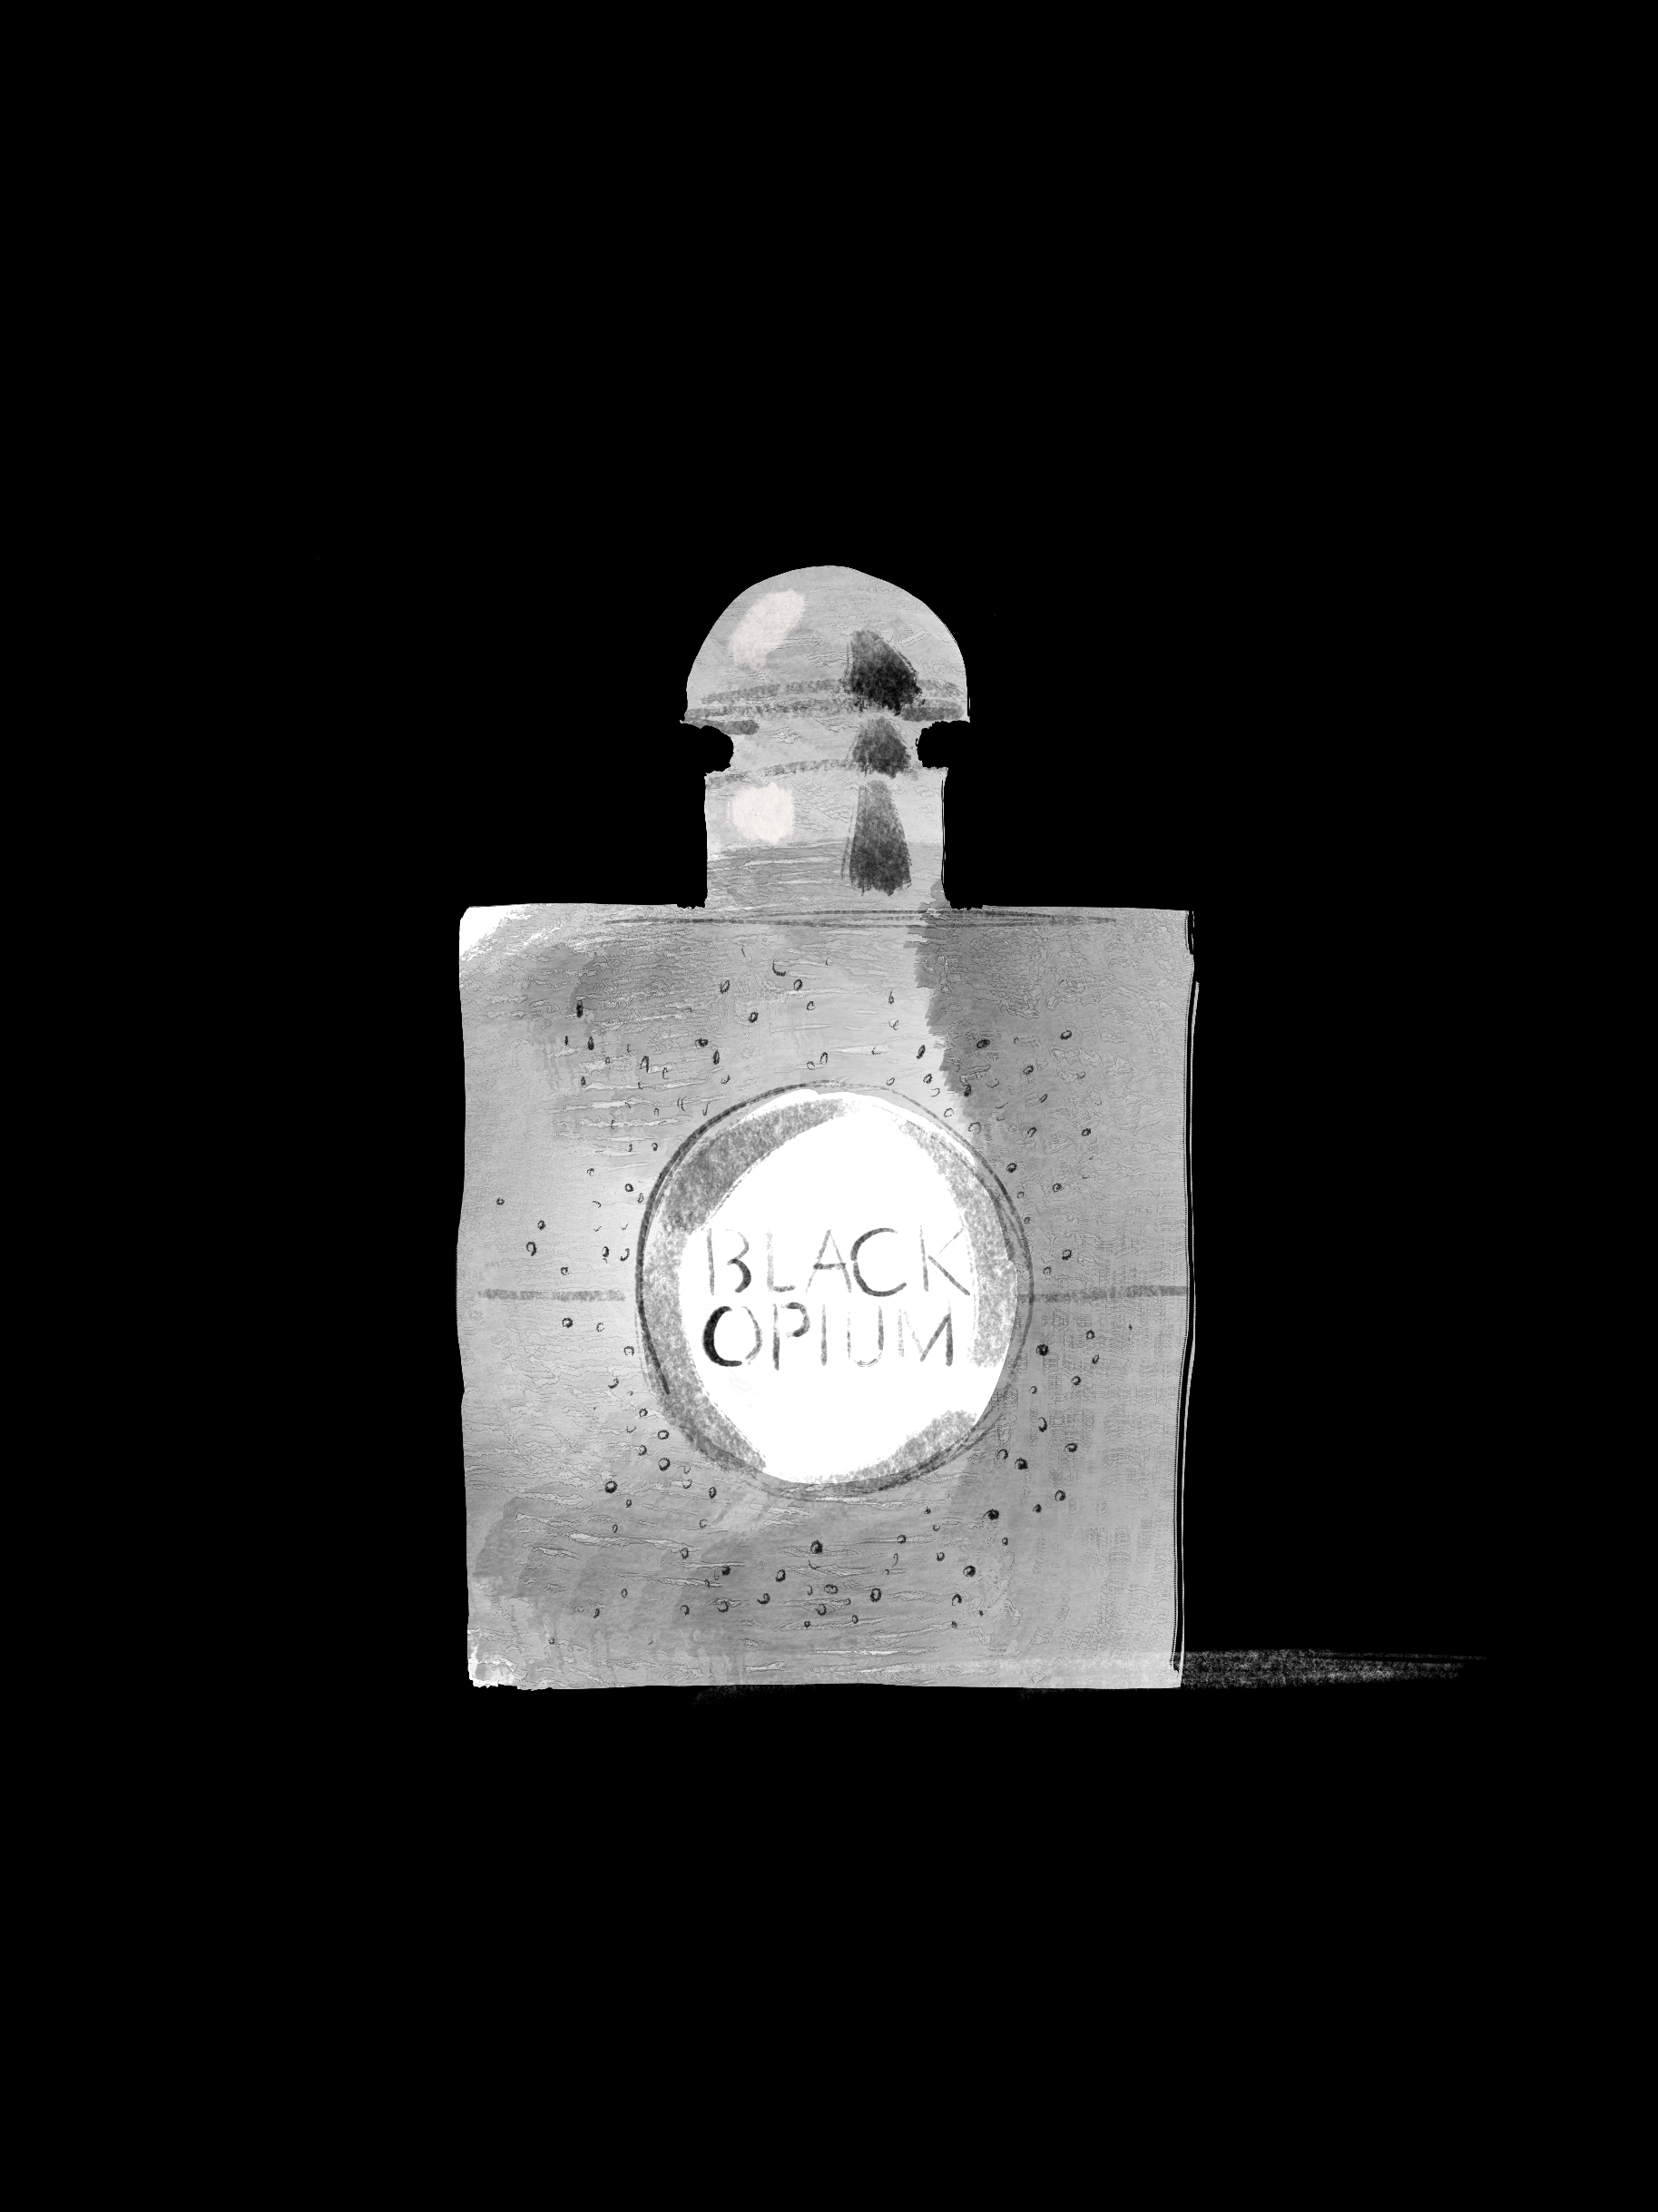 Black perfume bottle, beauty illustration by Silvana Mariani